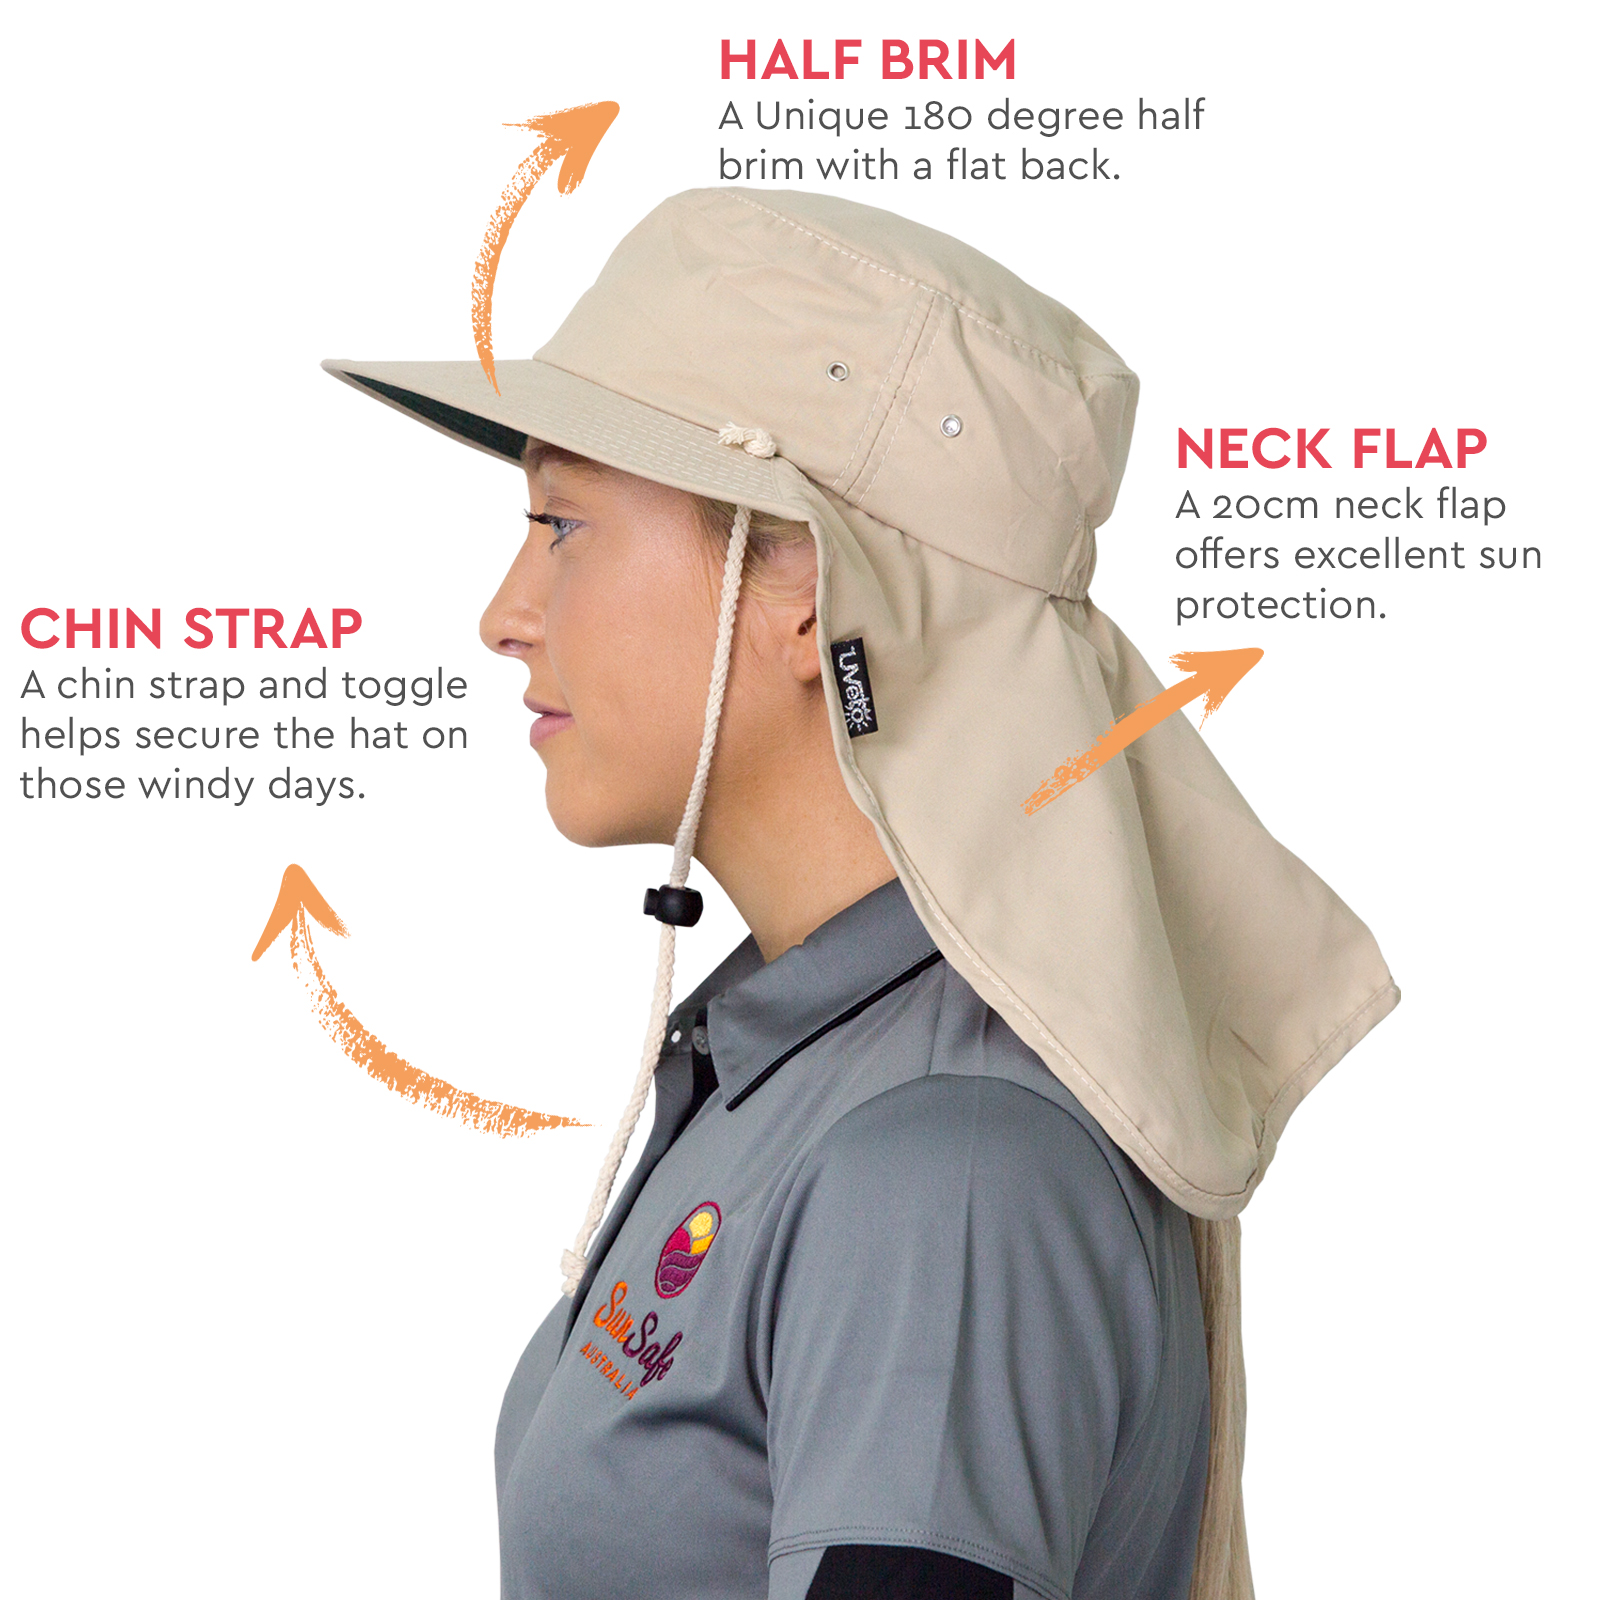 Half Brim Hat with Neck Flap UVeto Australia